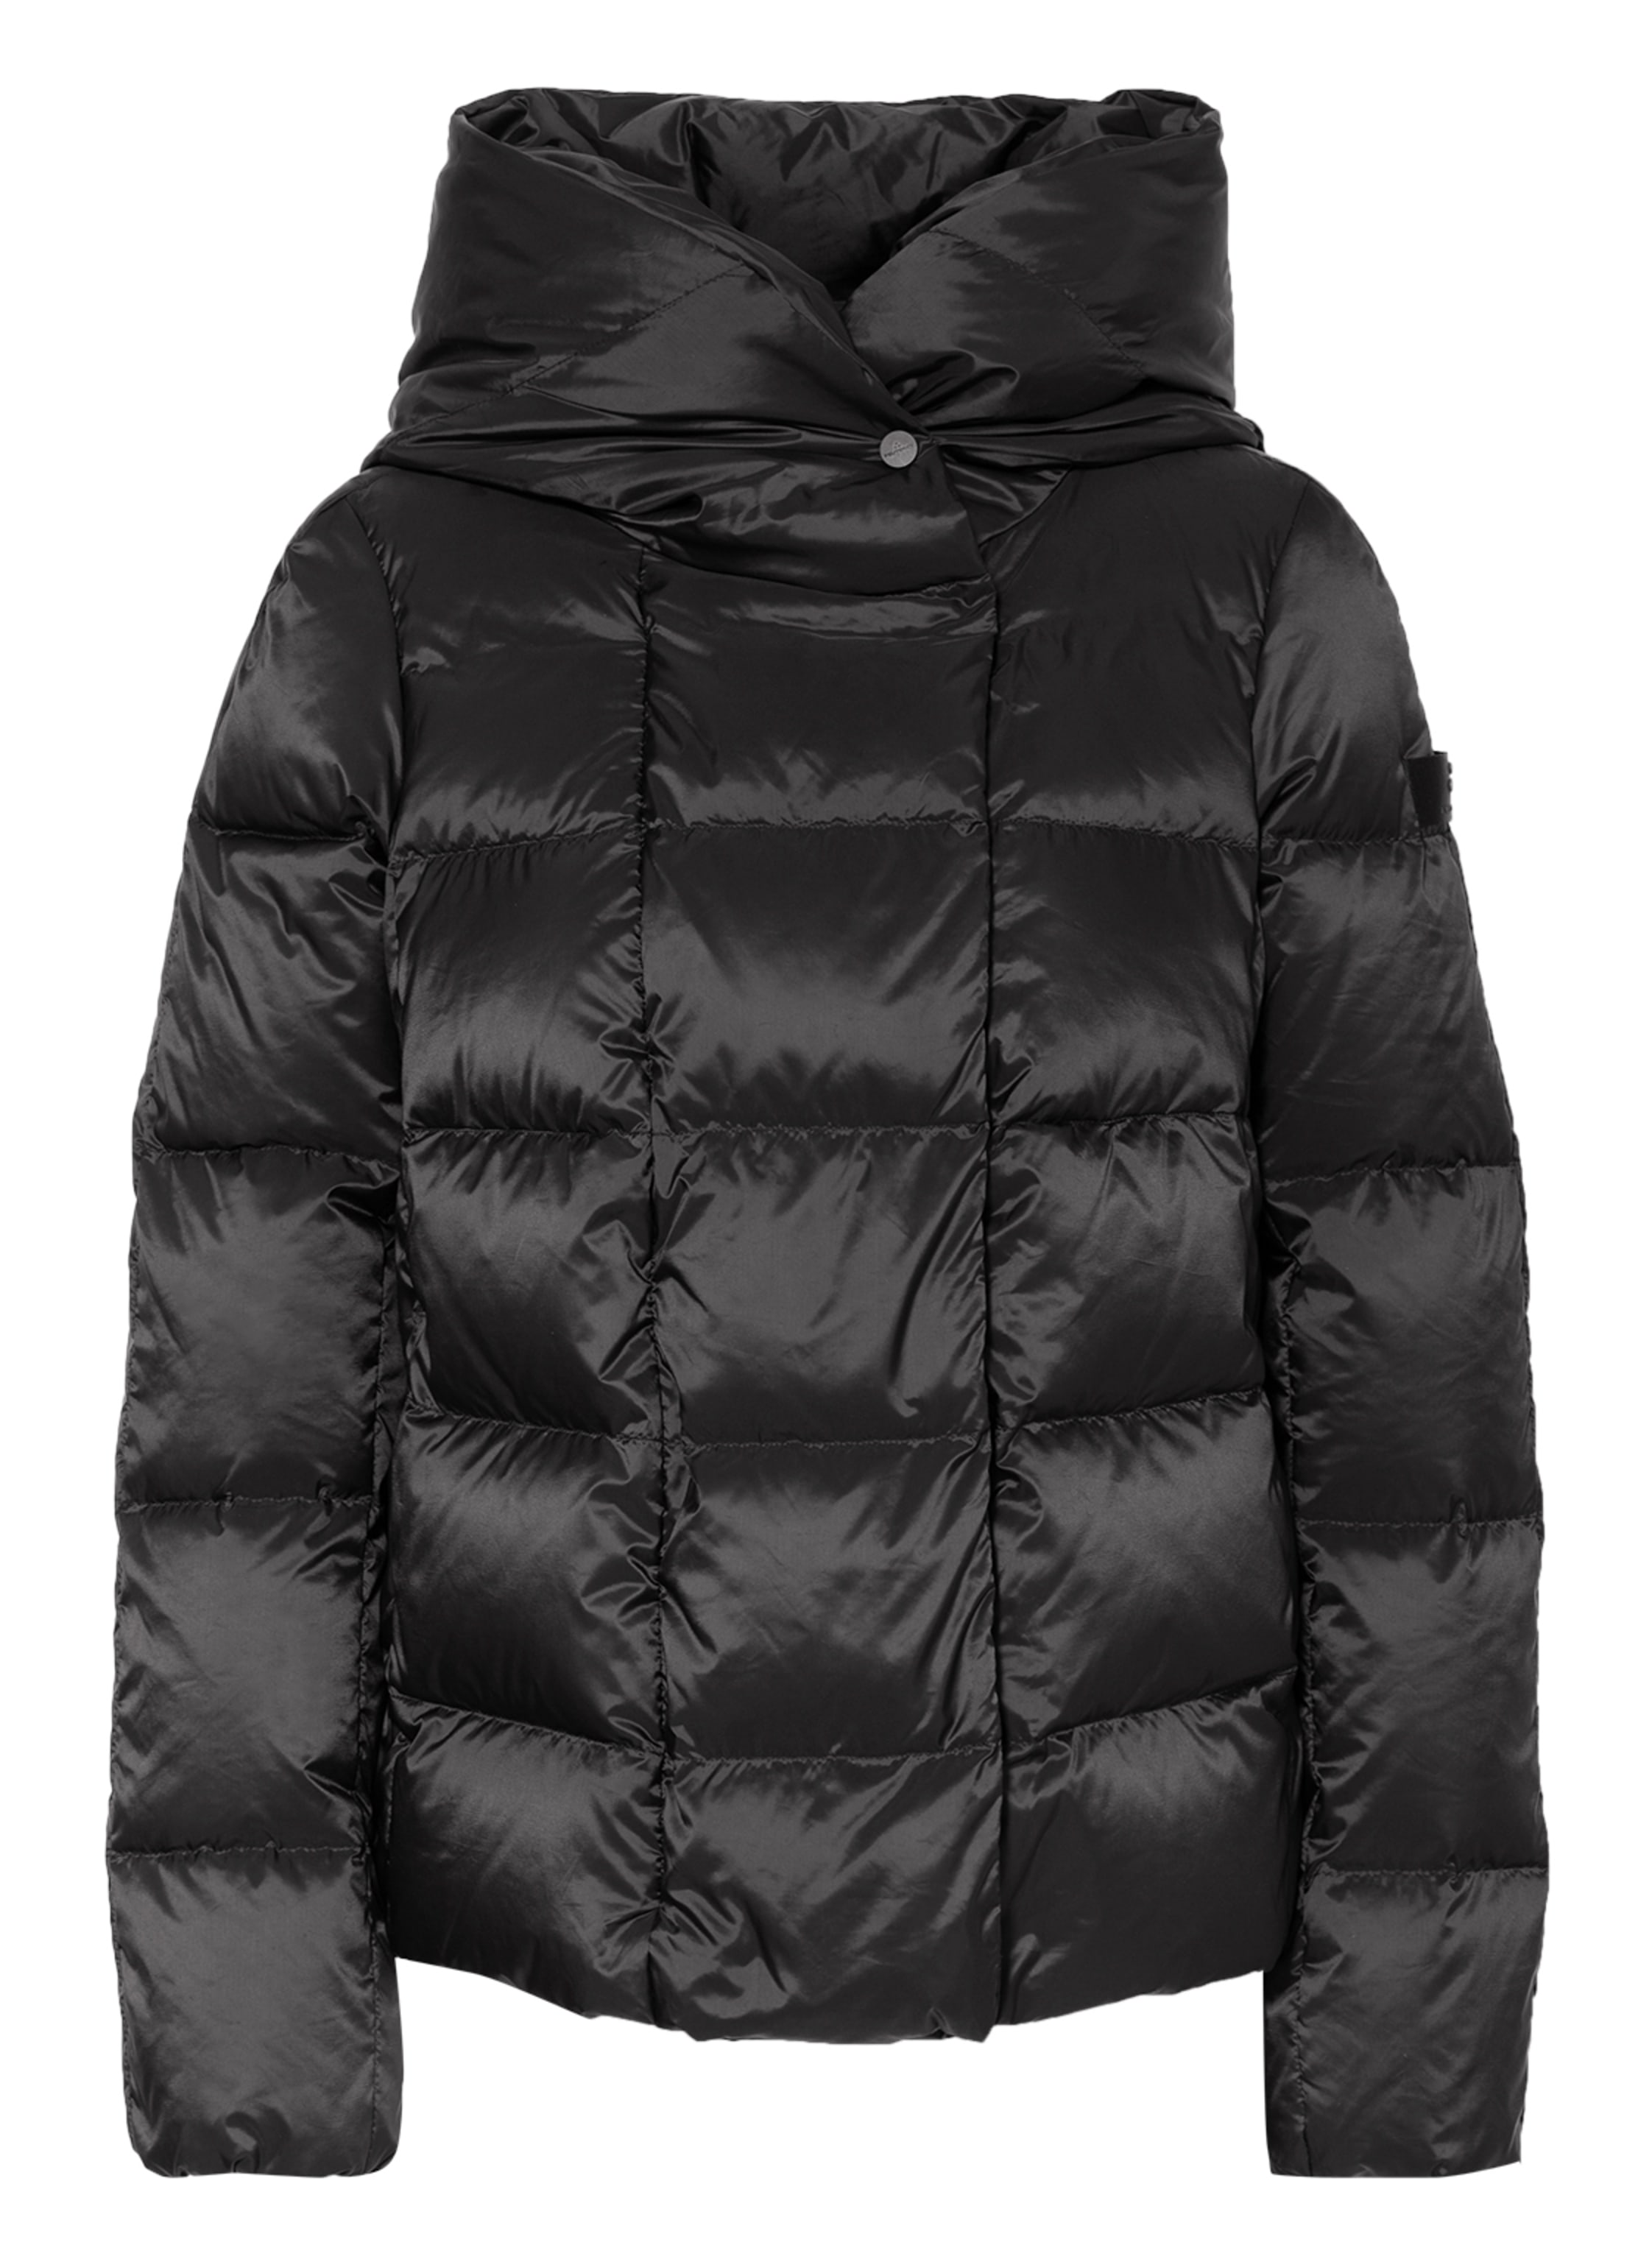 PEUTEREY Lightweight down jacket TUCANO in black | Breuninger